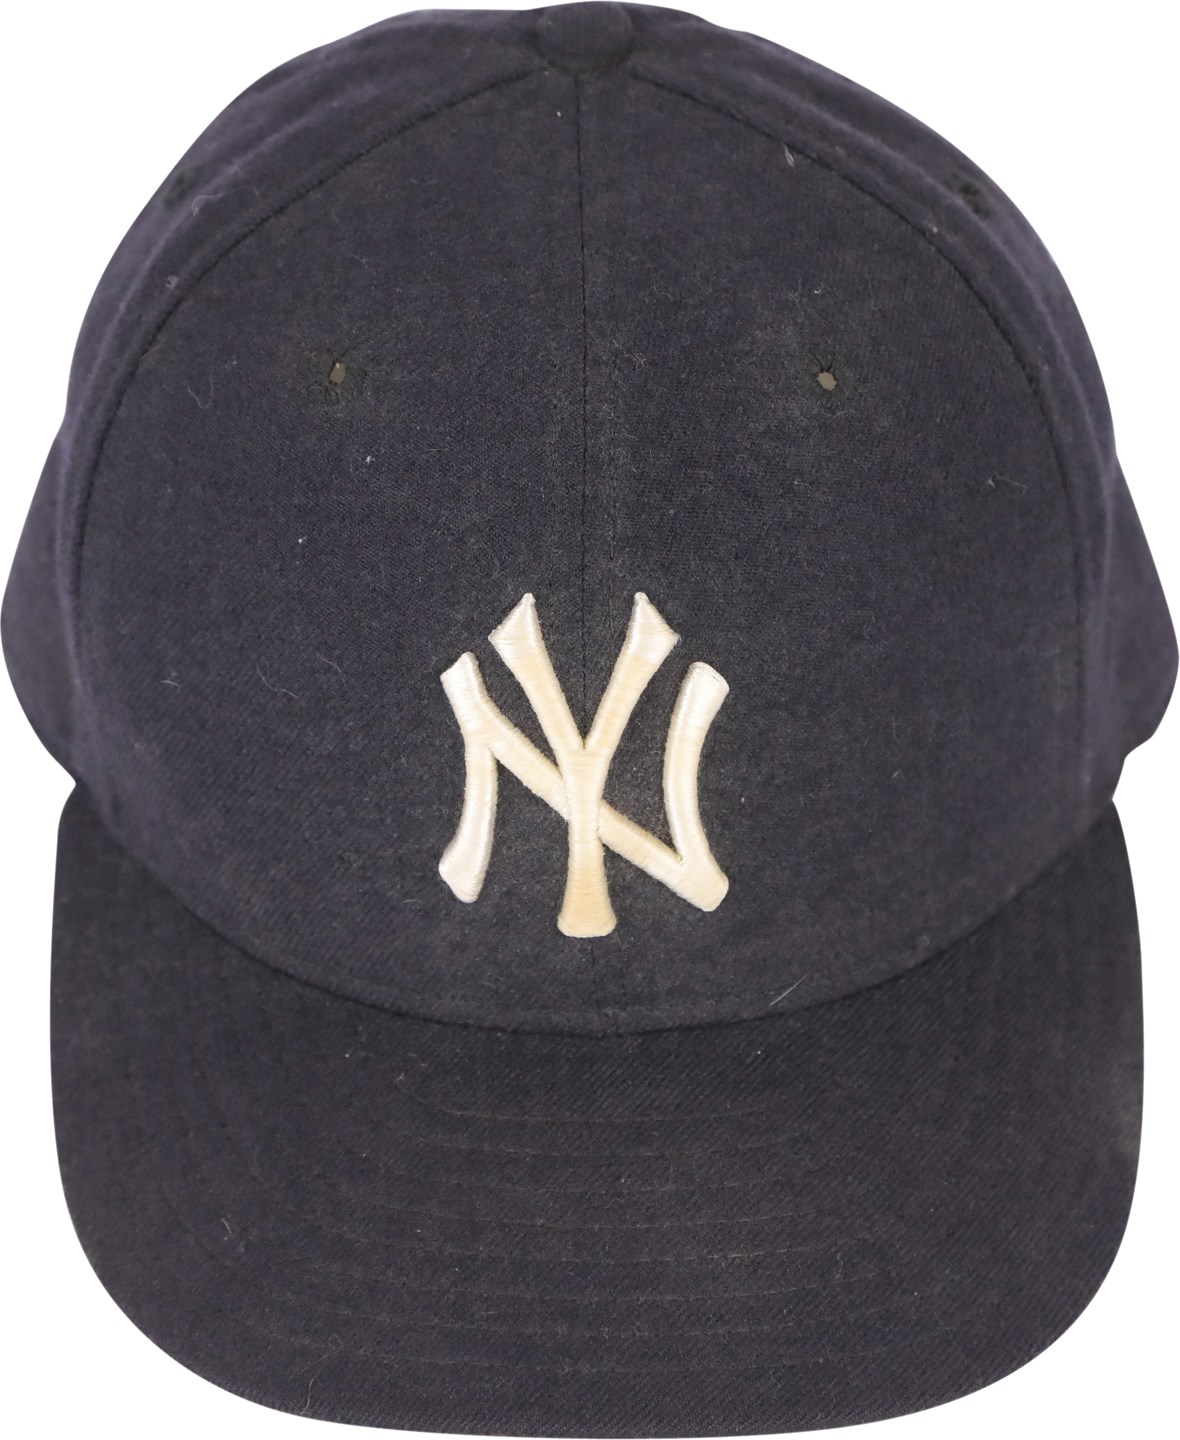 Baseball Equipment - 1995-96 Derek Jeter New York Yankees Game Used Rookie Era Hat